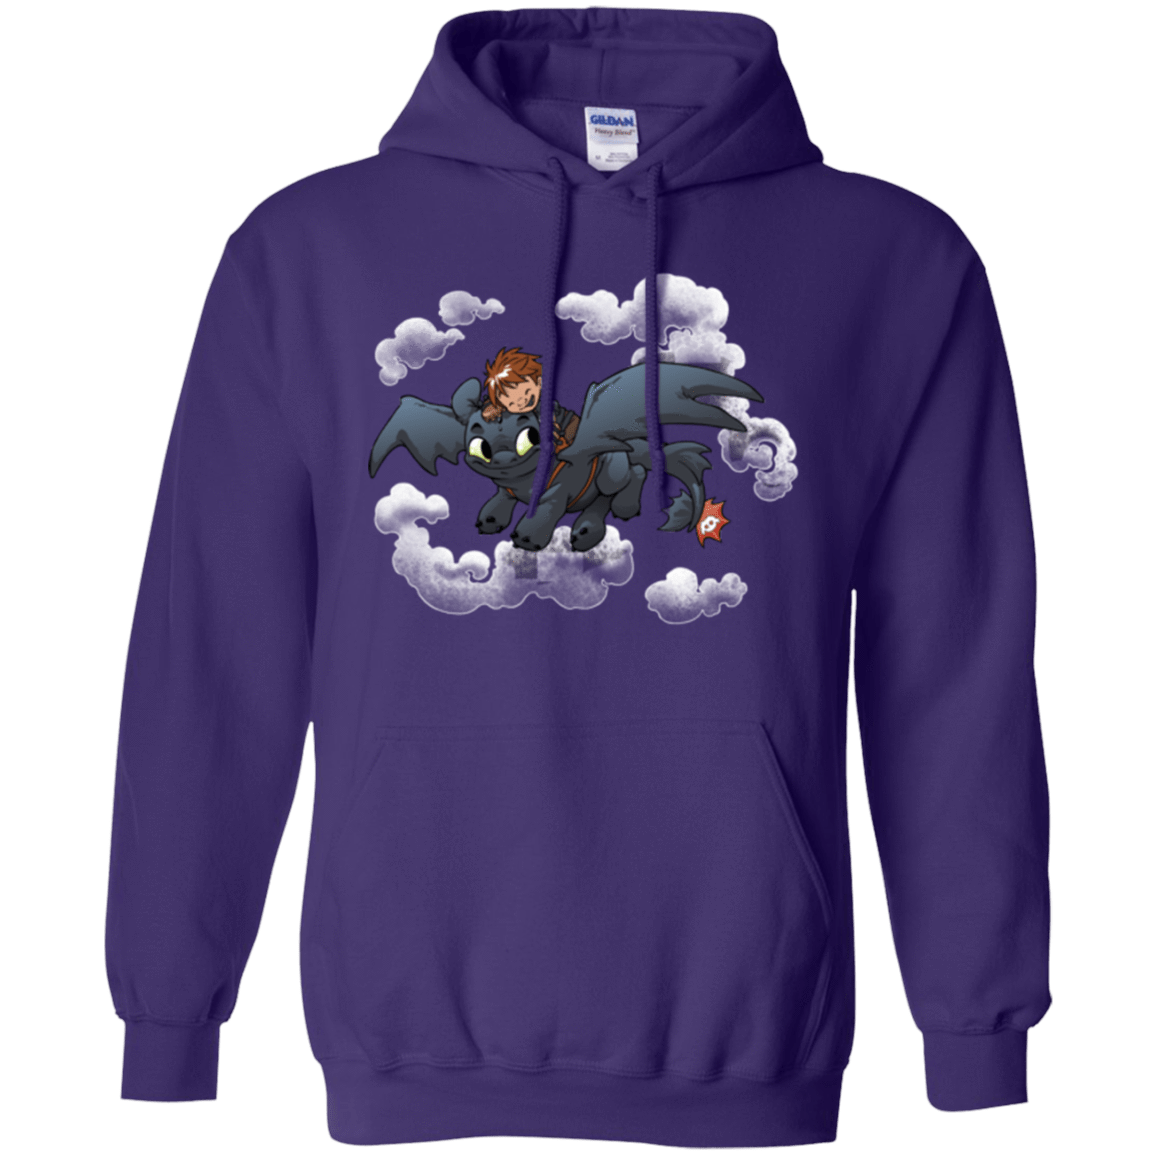 Sweatshirts Purple / Small Friendly Flight Pullover Hoodie